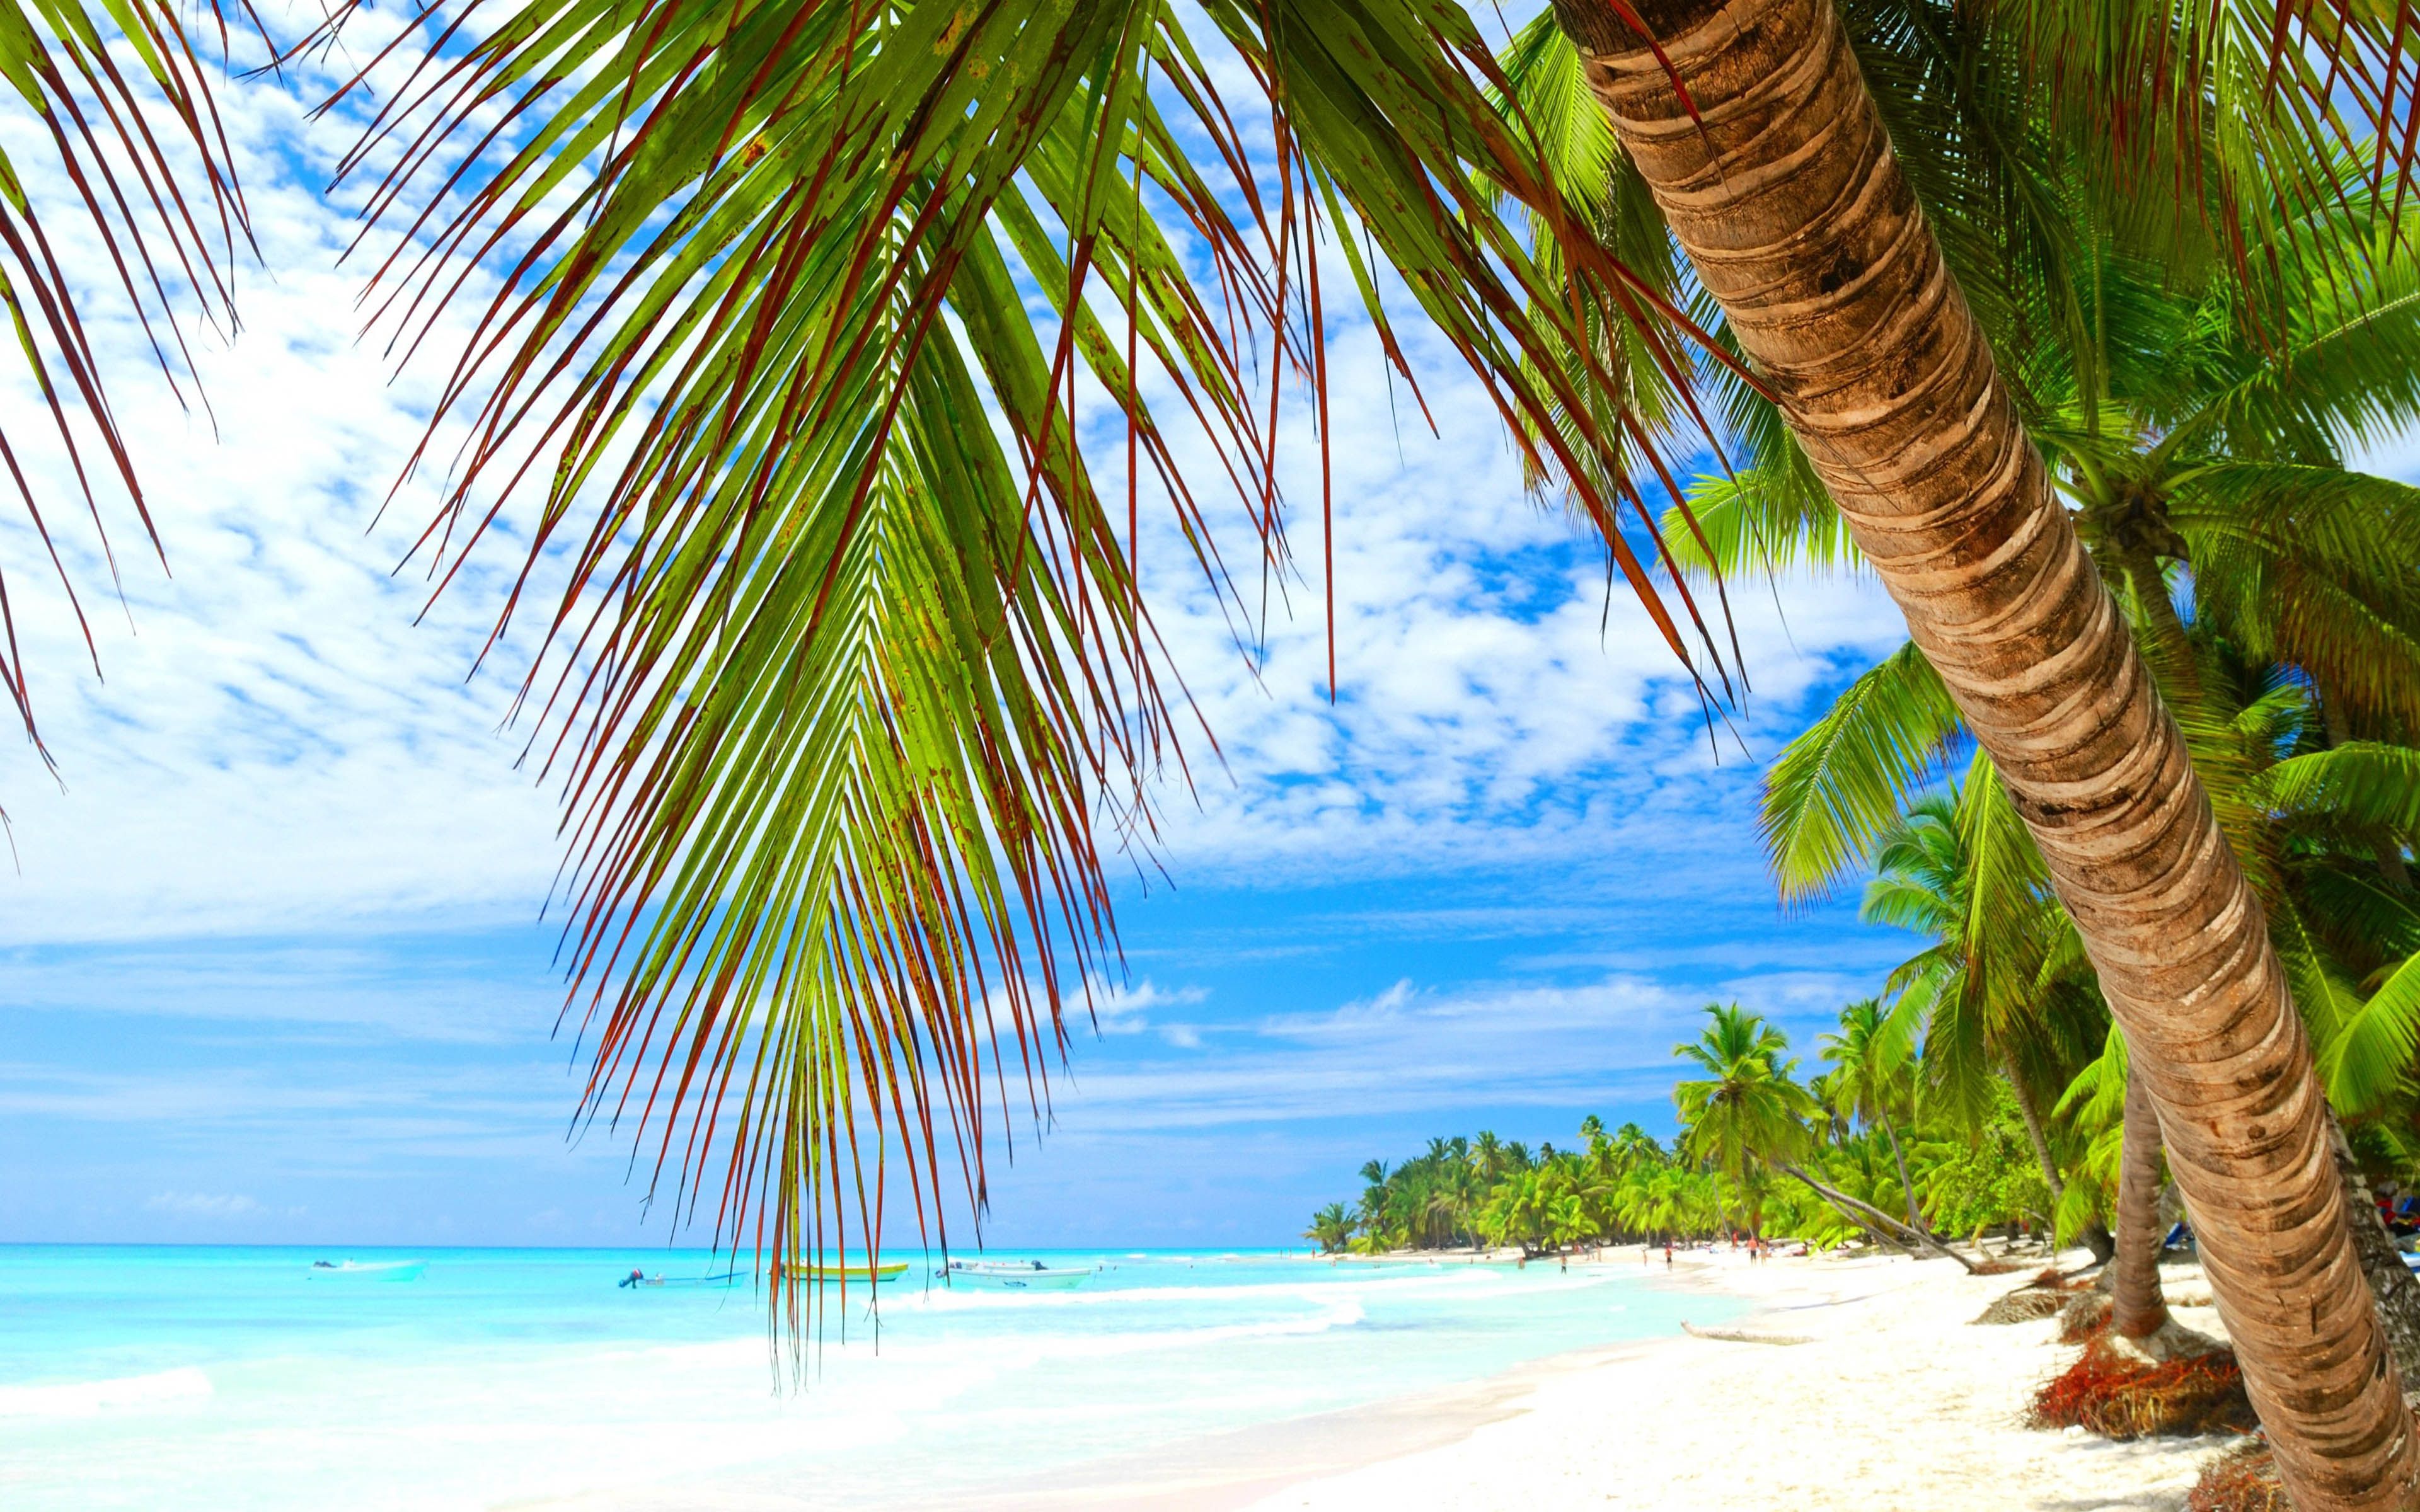 Tropical Island Vacation Sea Water Sky Sun Palm Beach Sand 4k Wallpaper HD Image For Desktop And Mobile 3840x2400, Wallpaper13.com